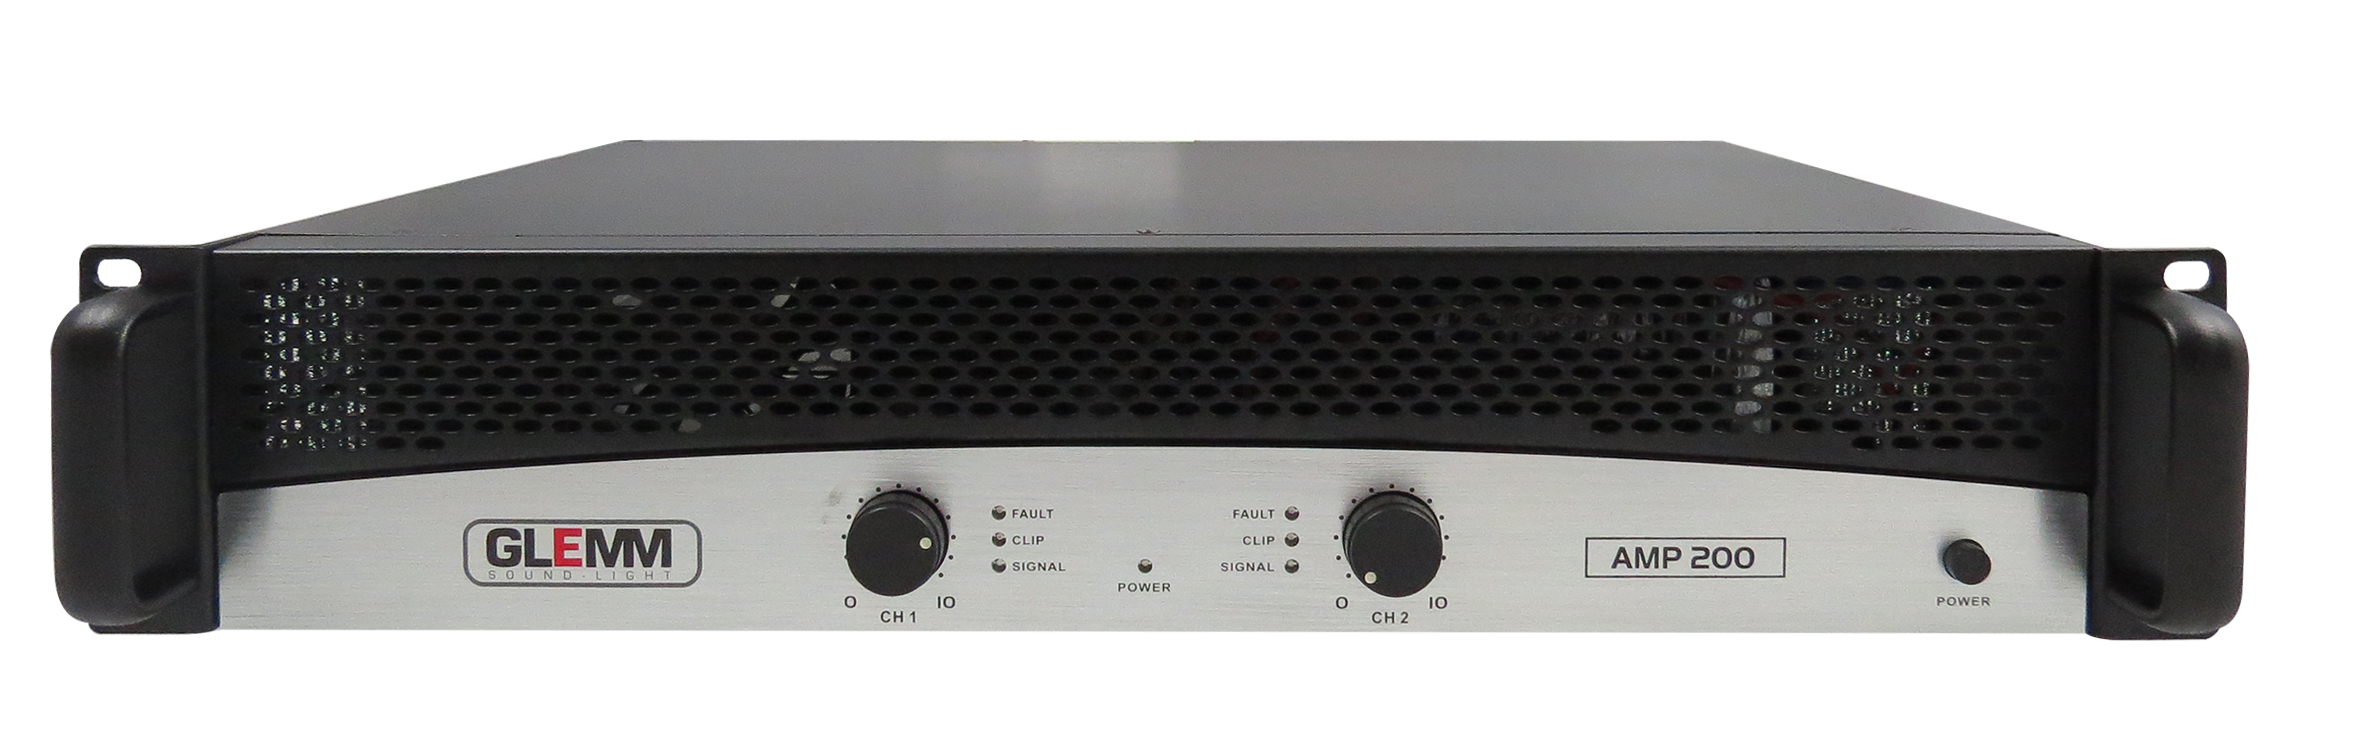 Karma AMP 200 - Amplificatore stereo 2 x 200W